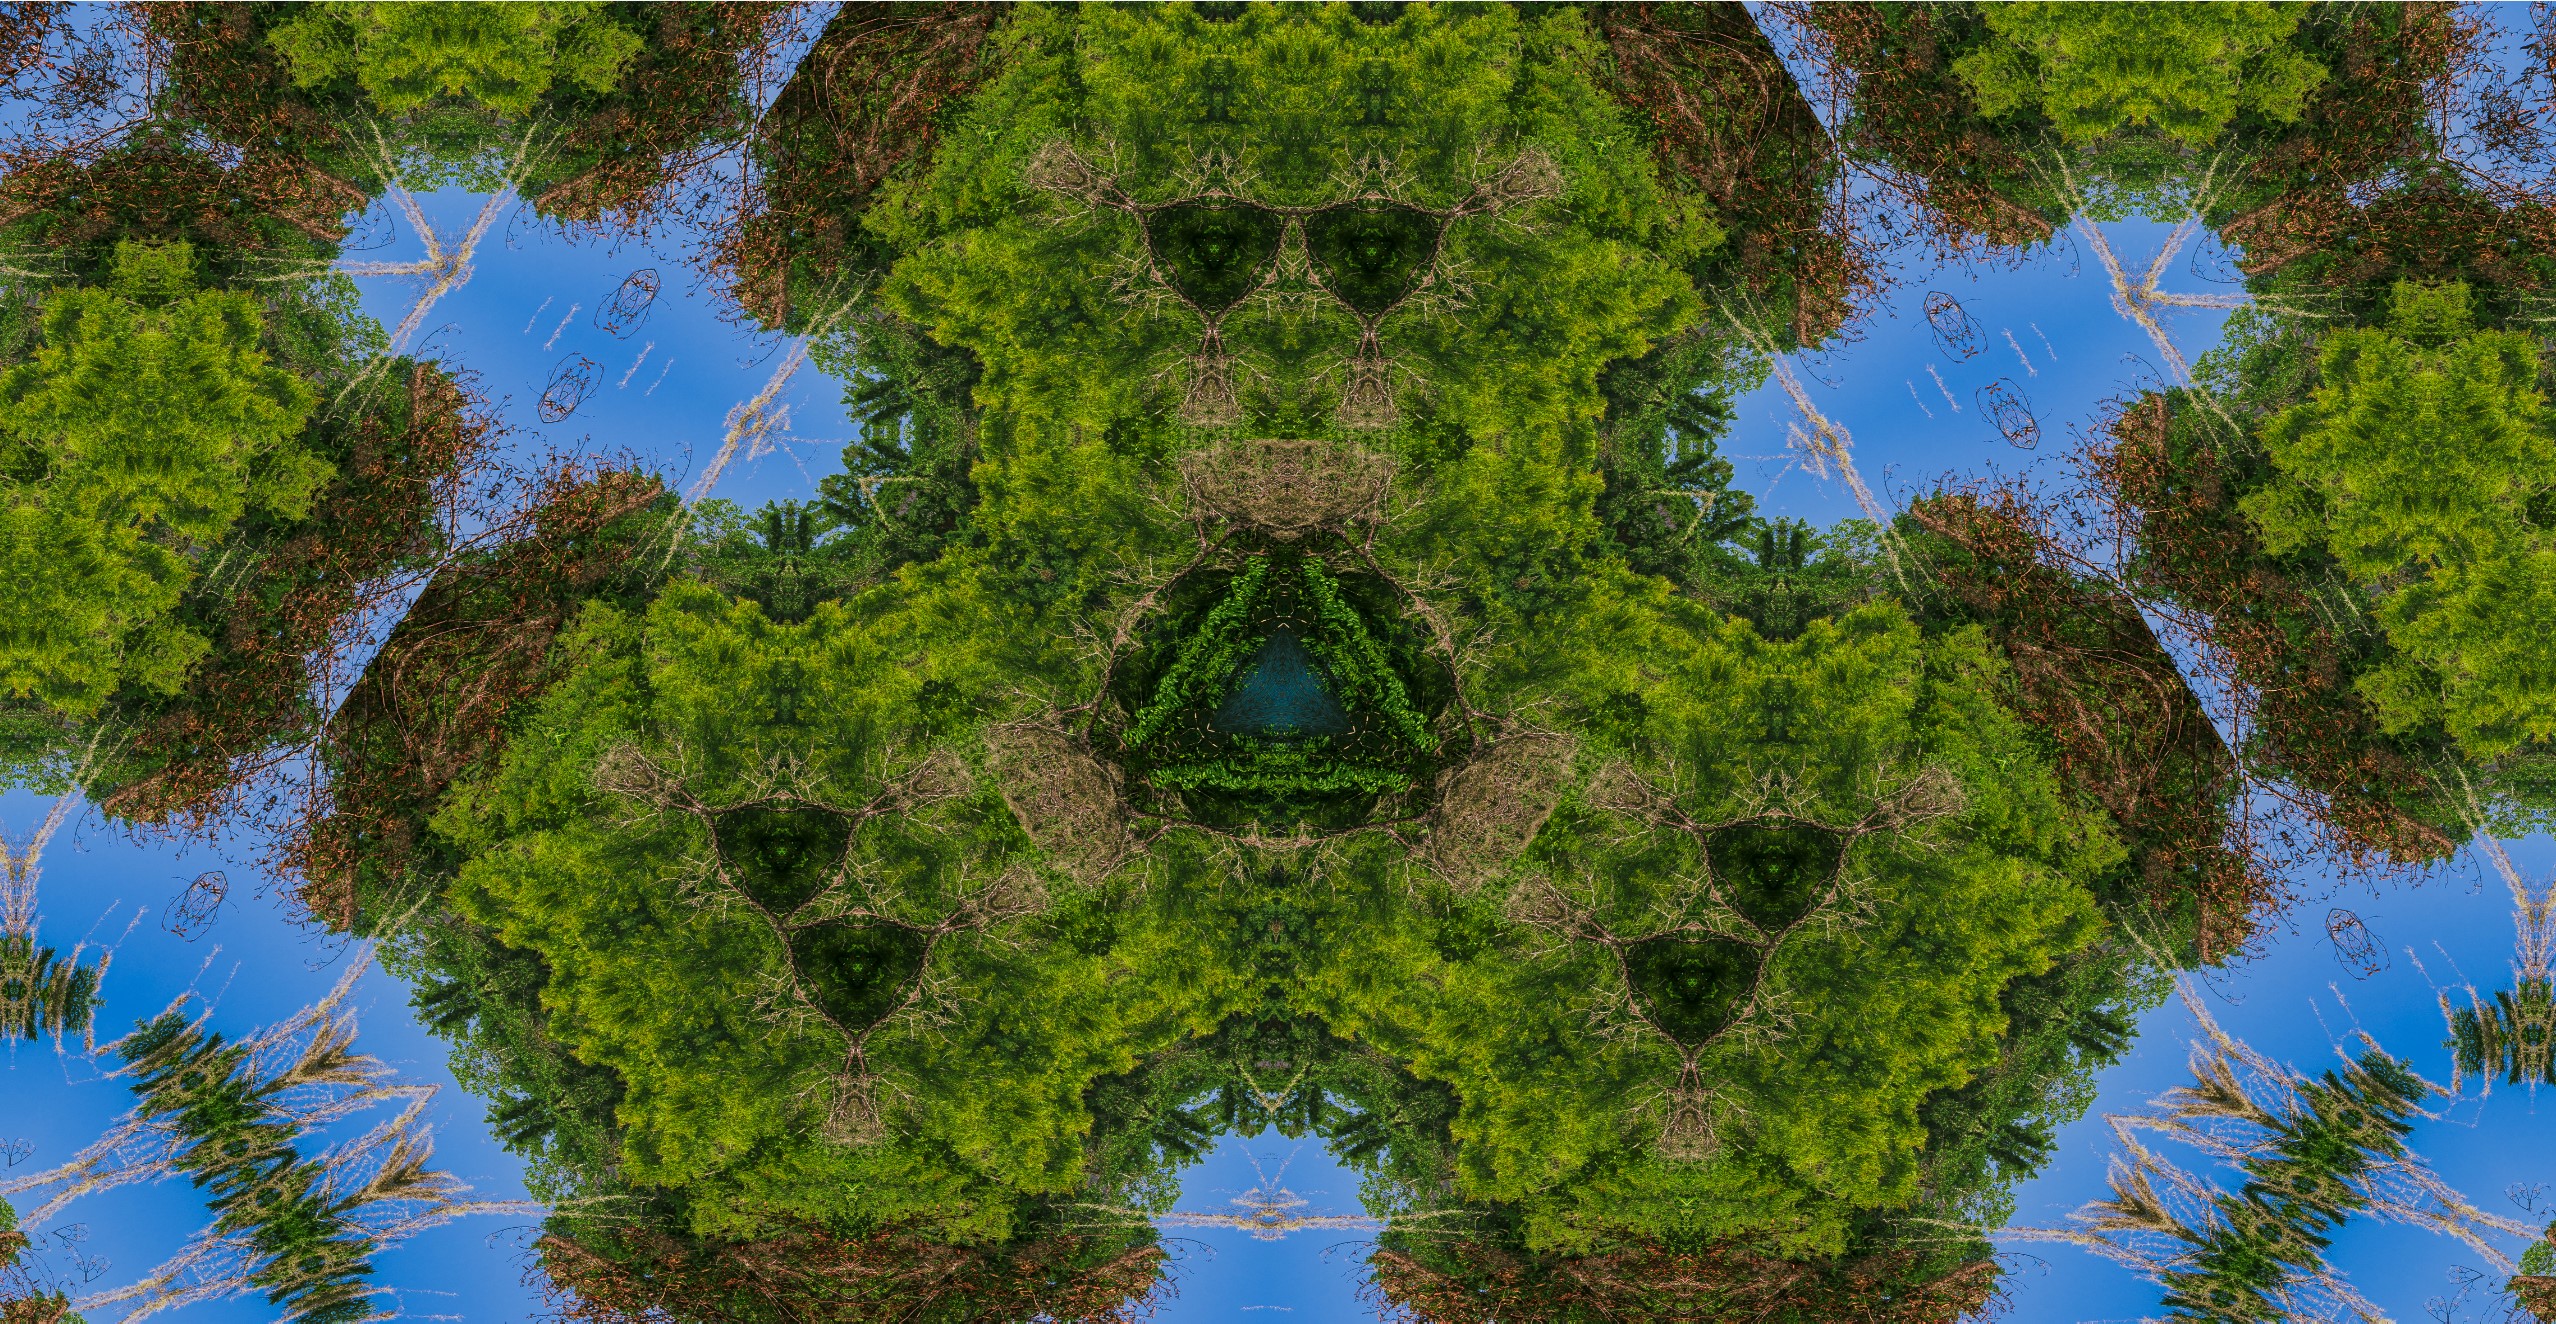 Kaleidoscope of Nature